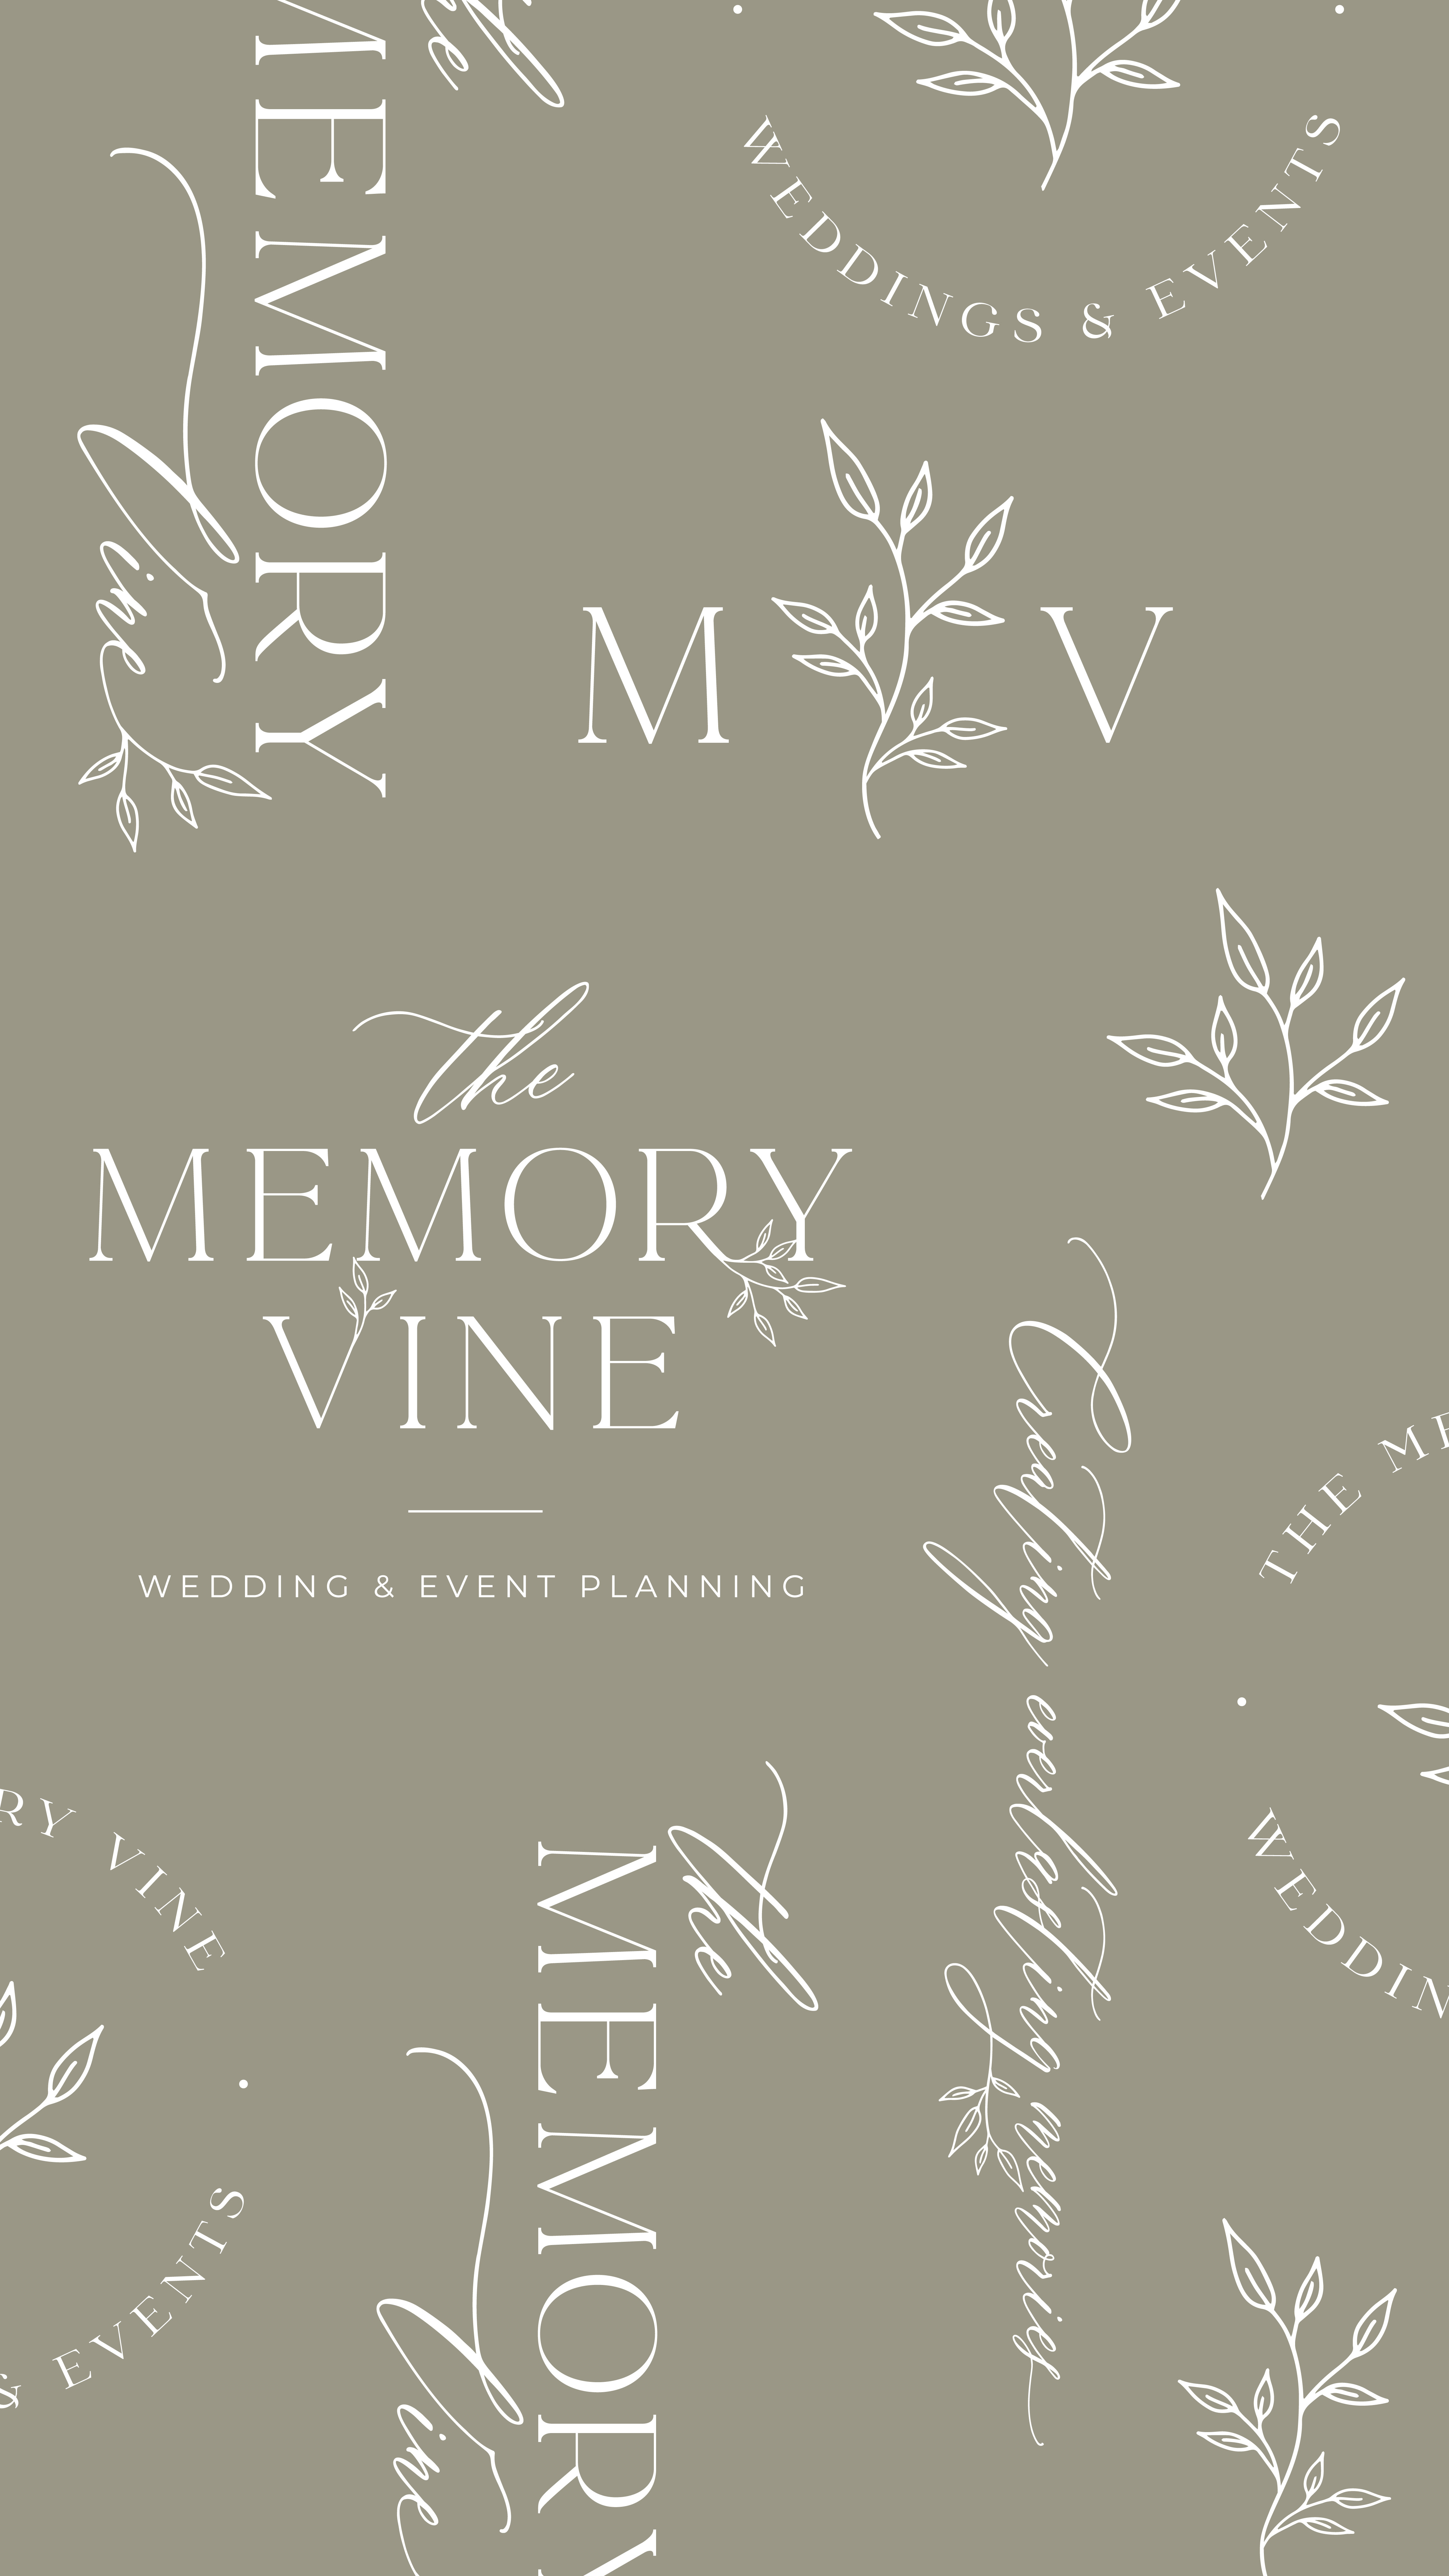 The anatomy of a brand: the memory vine